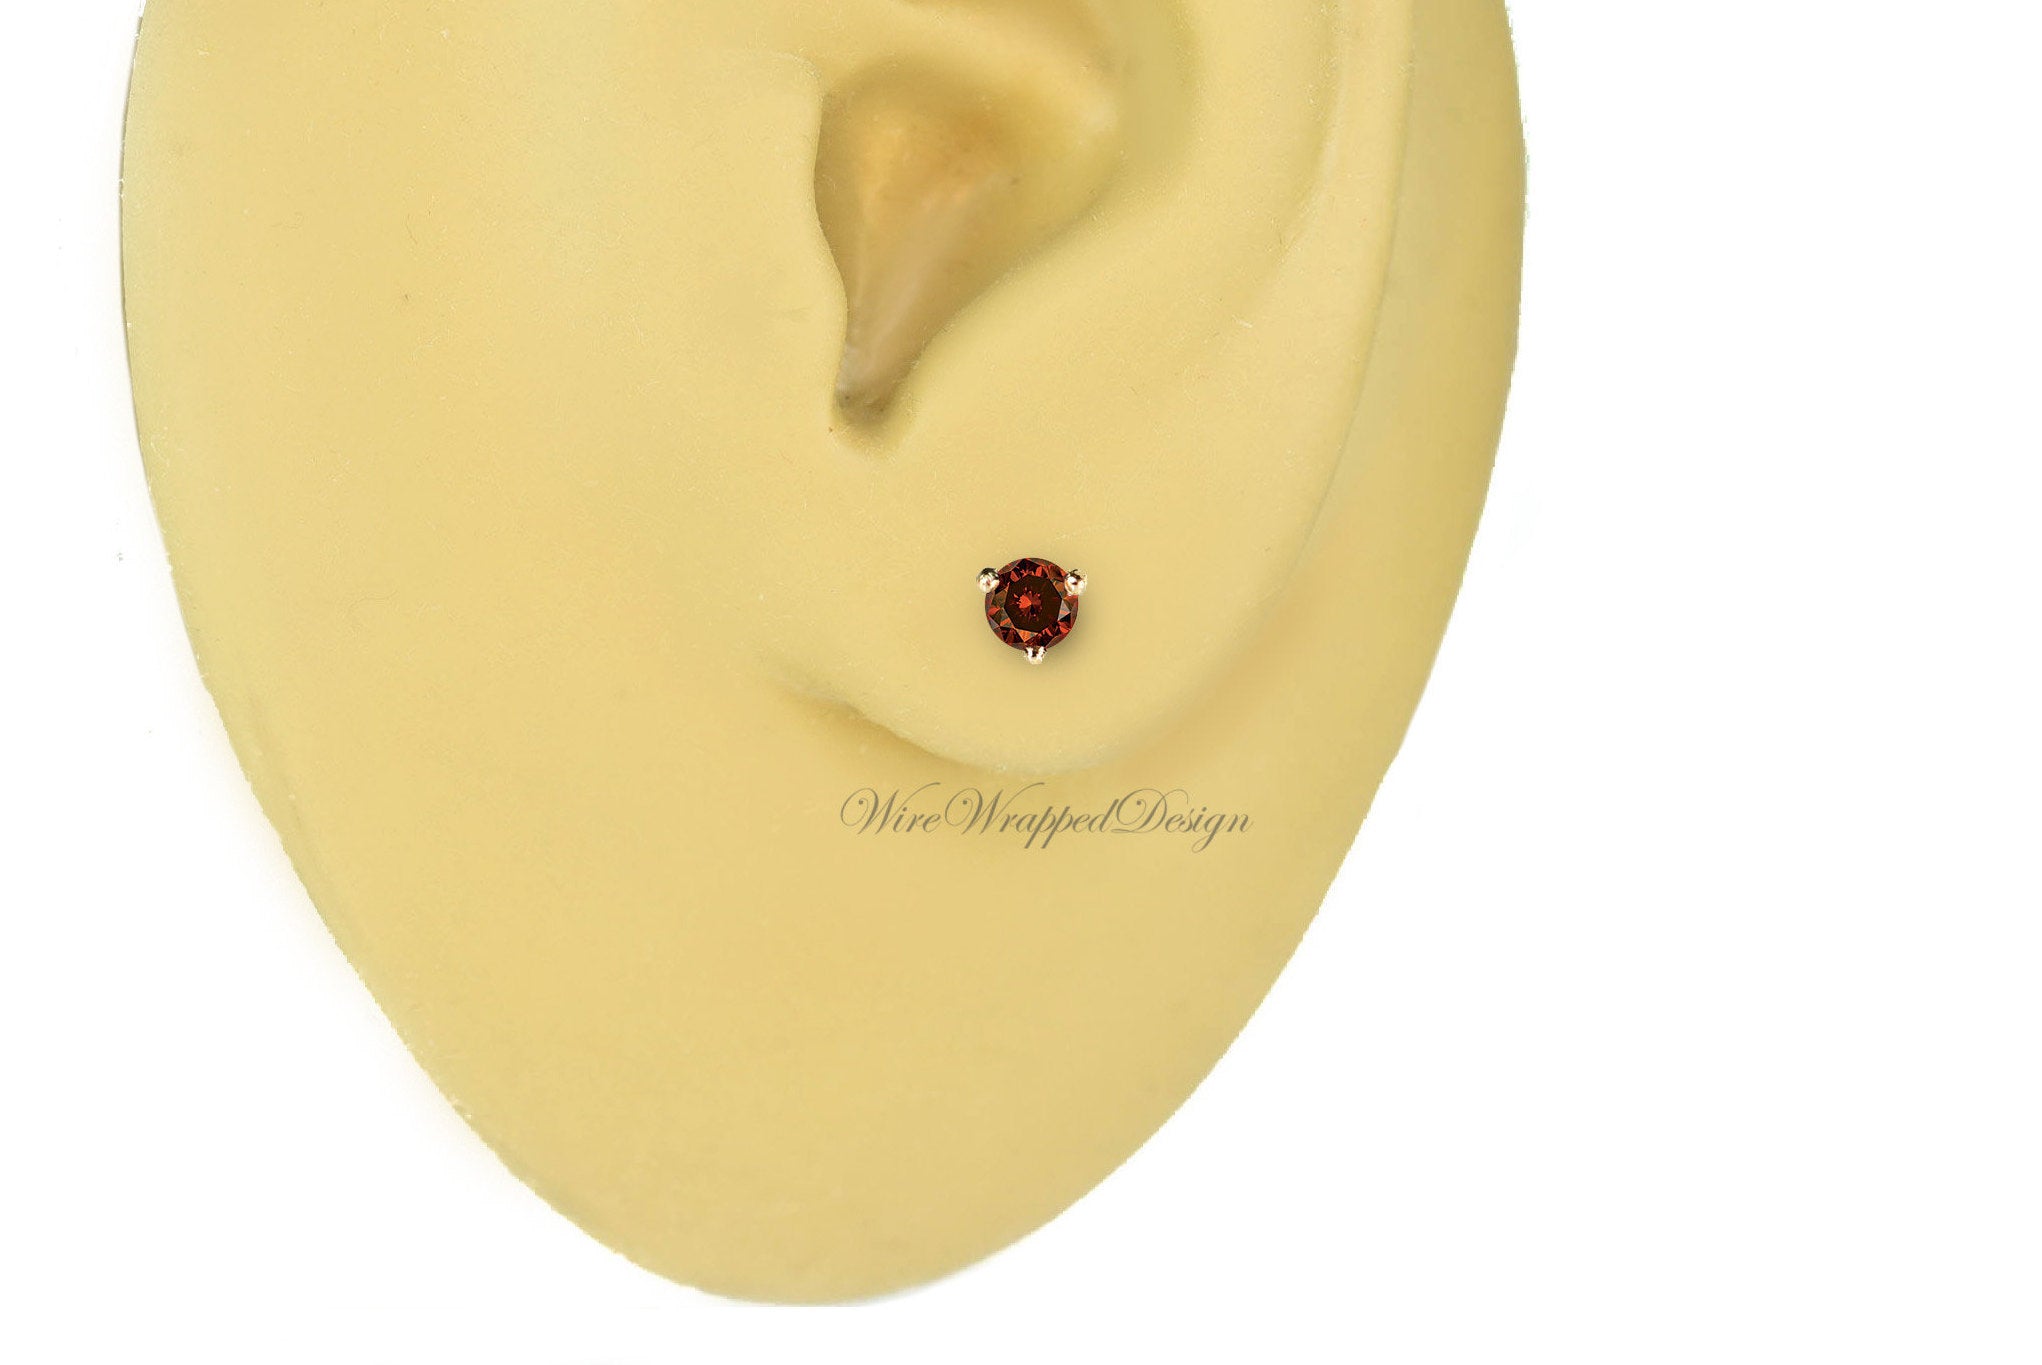 PAIR Genuine Dark ORANGE DIAMOND Earring Studs 3mm 0.2tcw Martini 14k Solid Gold (Yellow, Rose,White) Platinum Silver Cartilage Helix Tragus